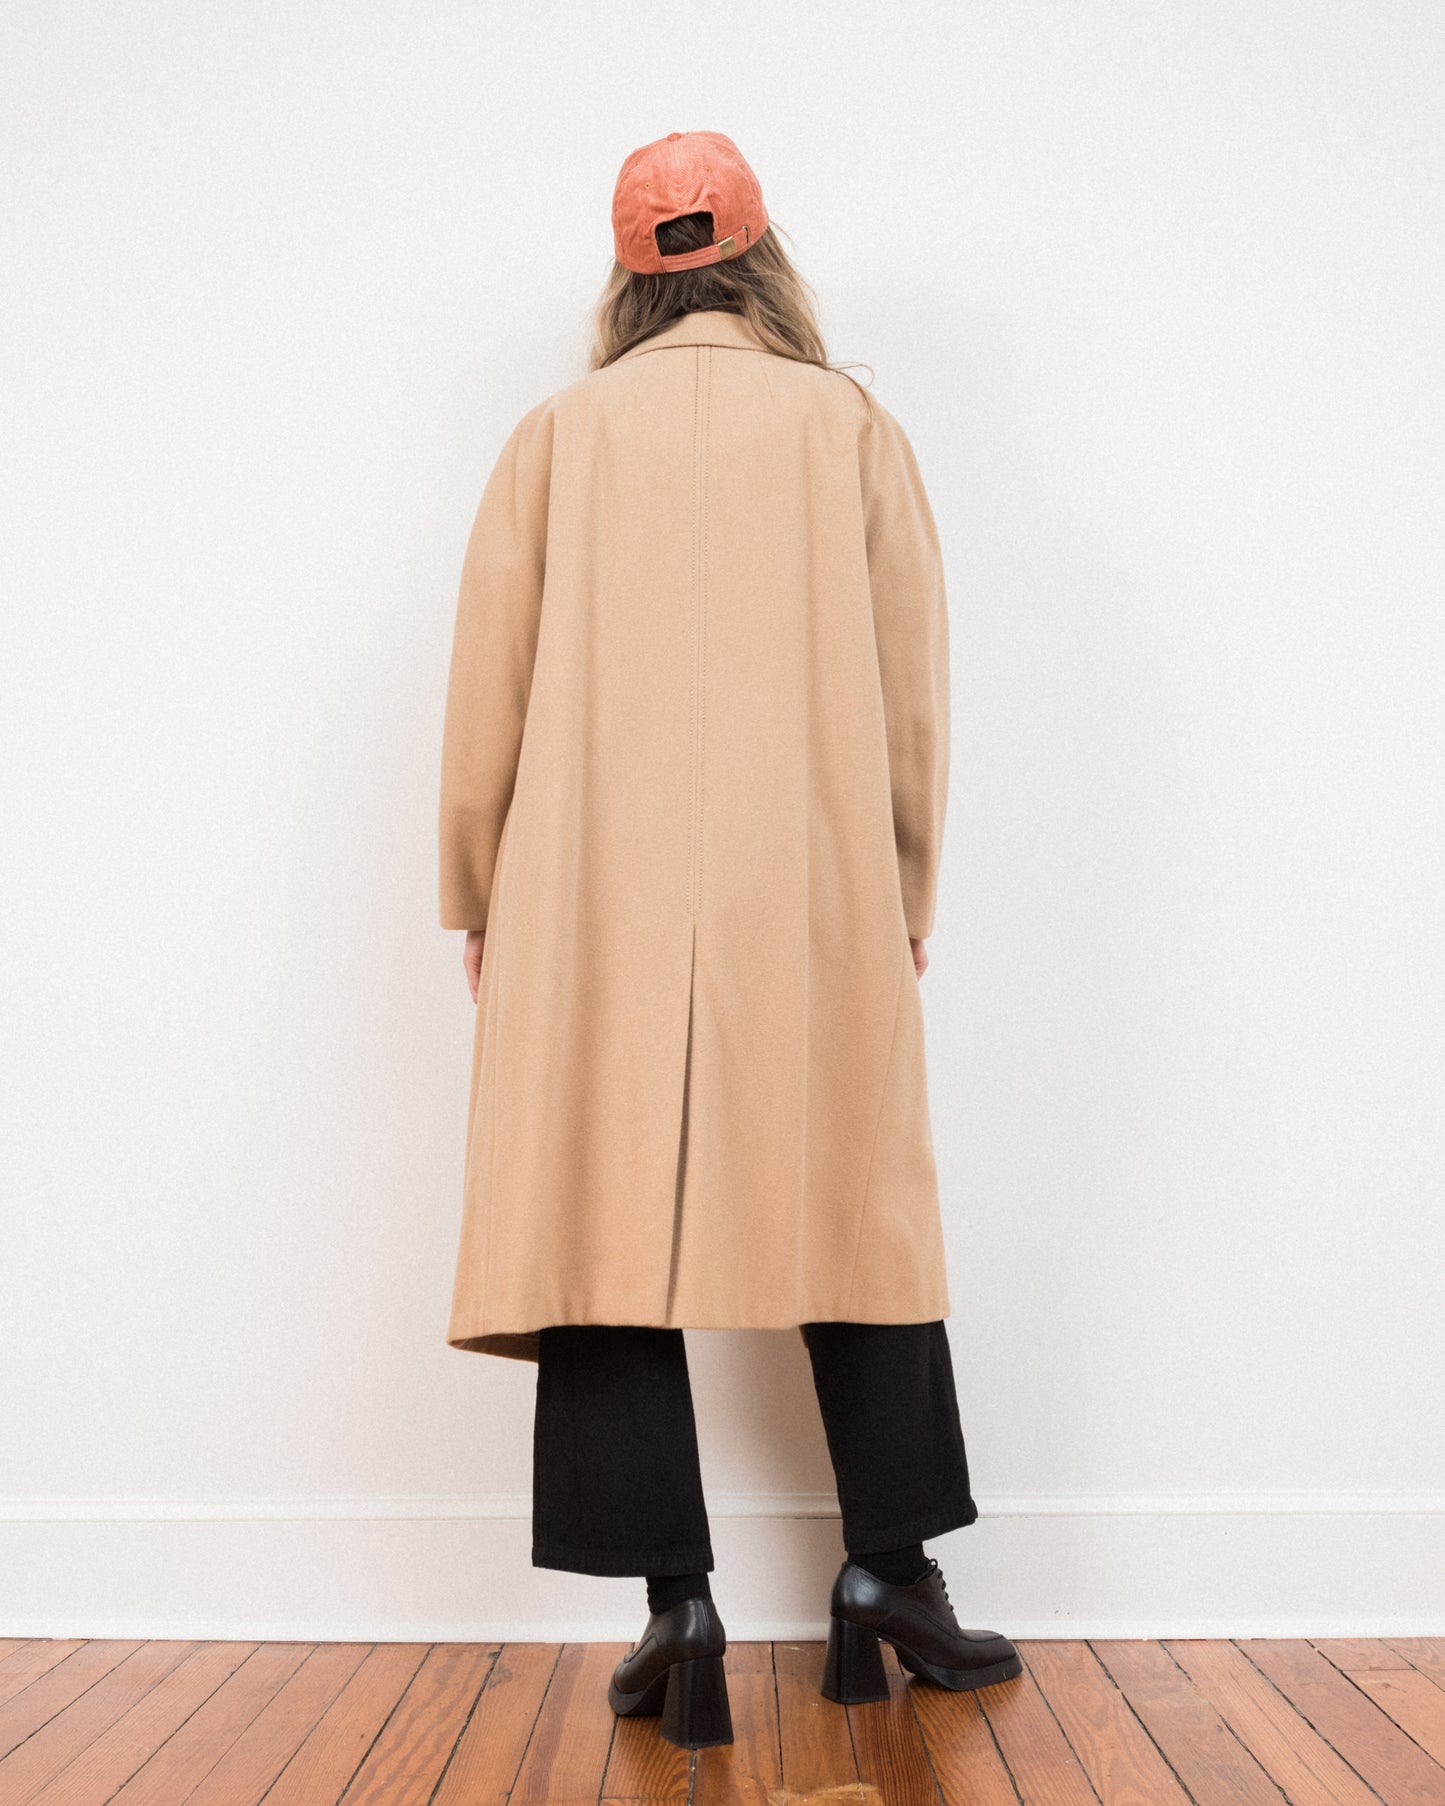 Vintage Camel Wool BERLIN Coat #16 (XS/S + S/M)